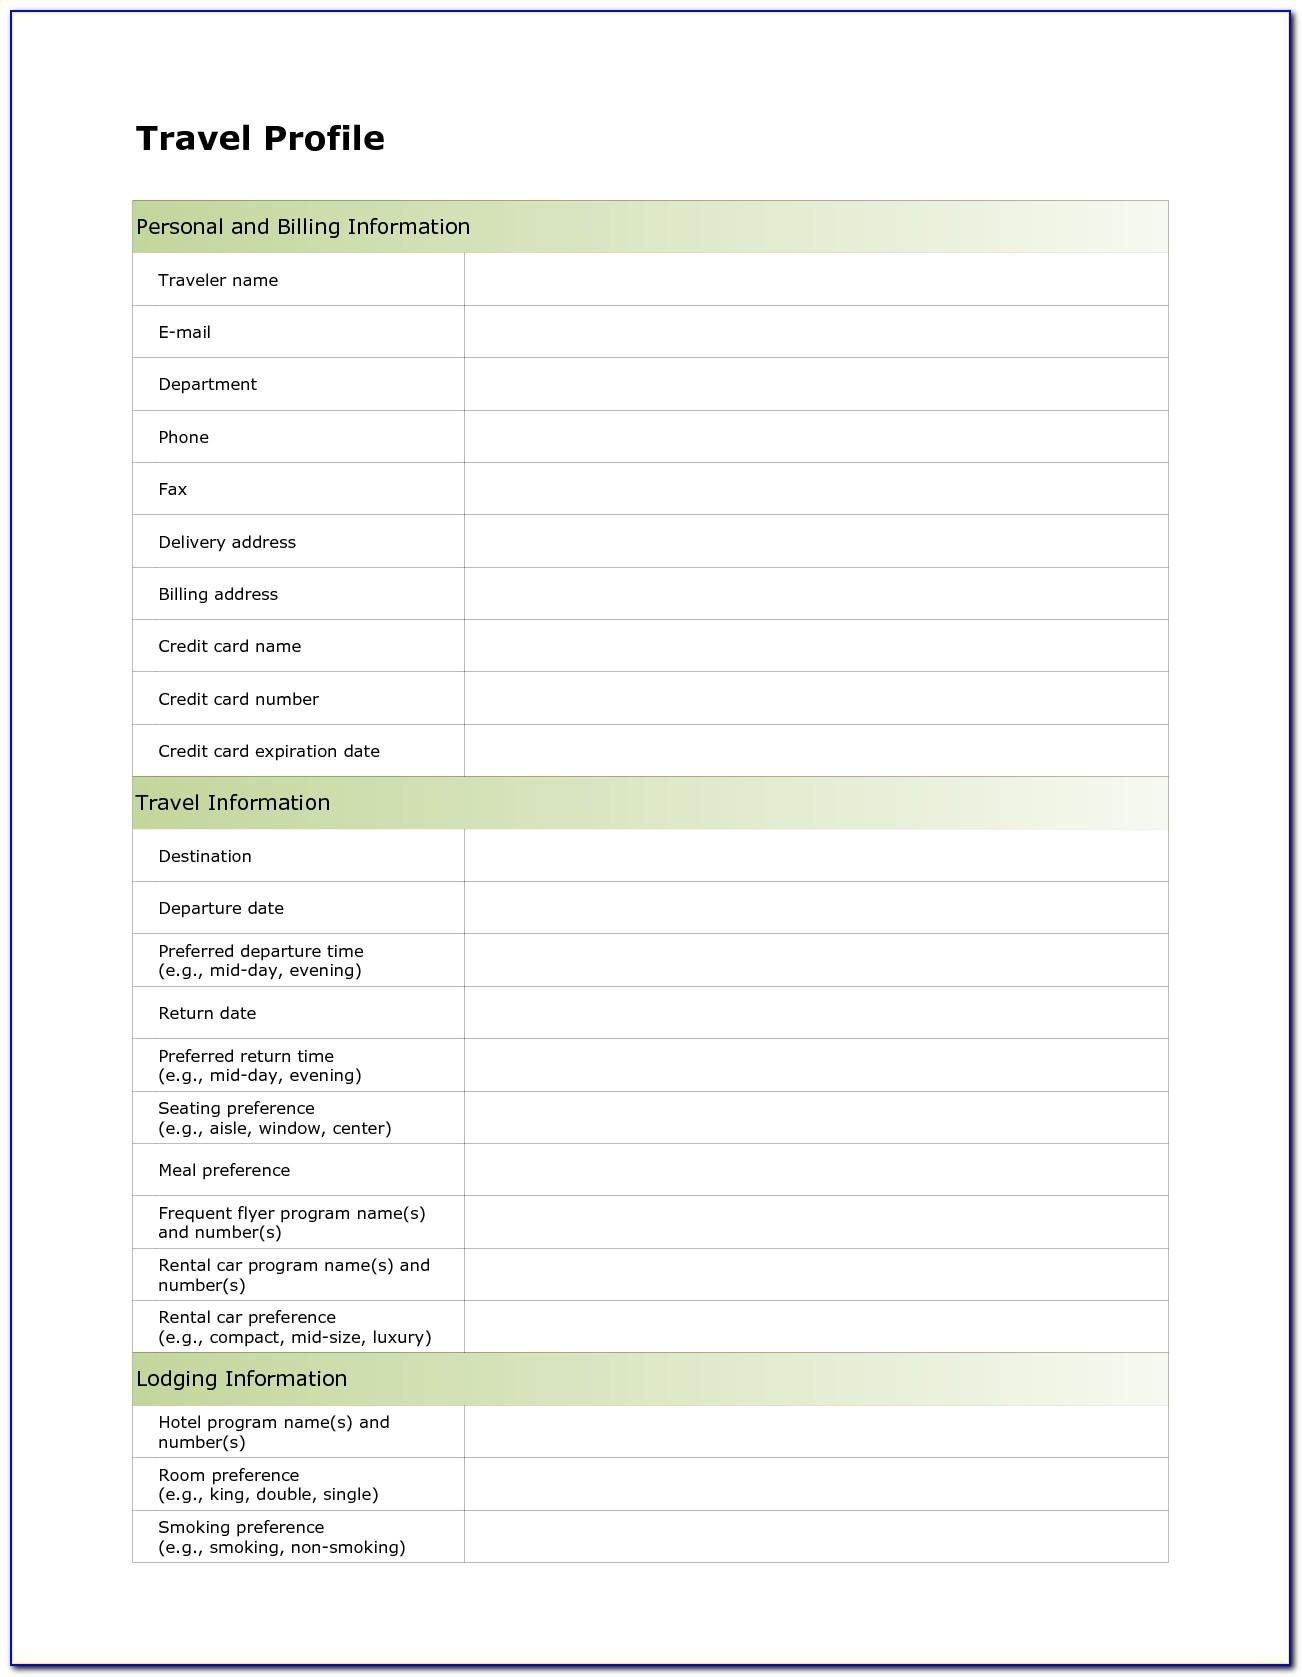 queensland government travel profile form